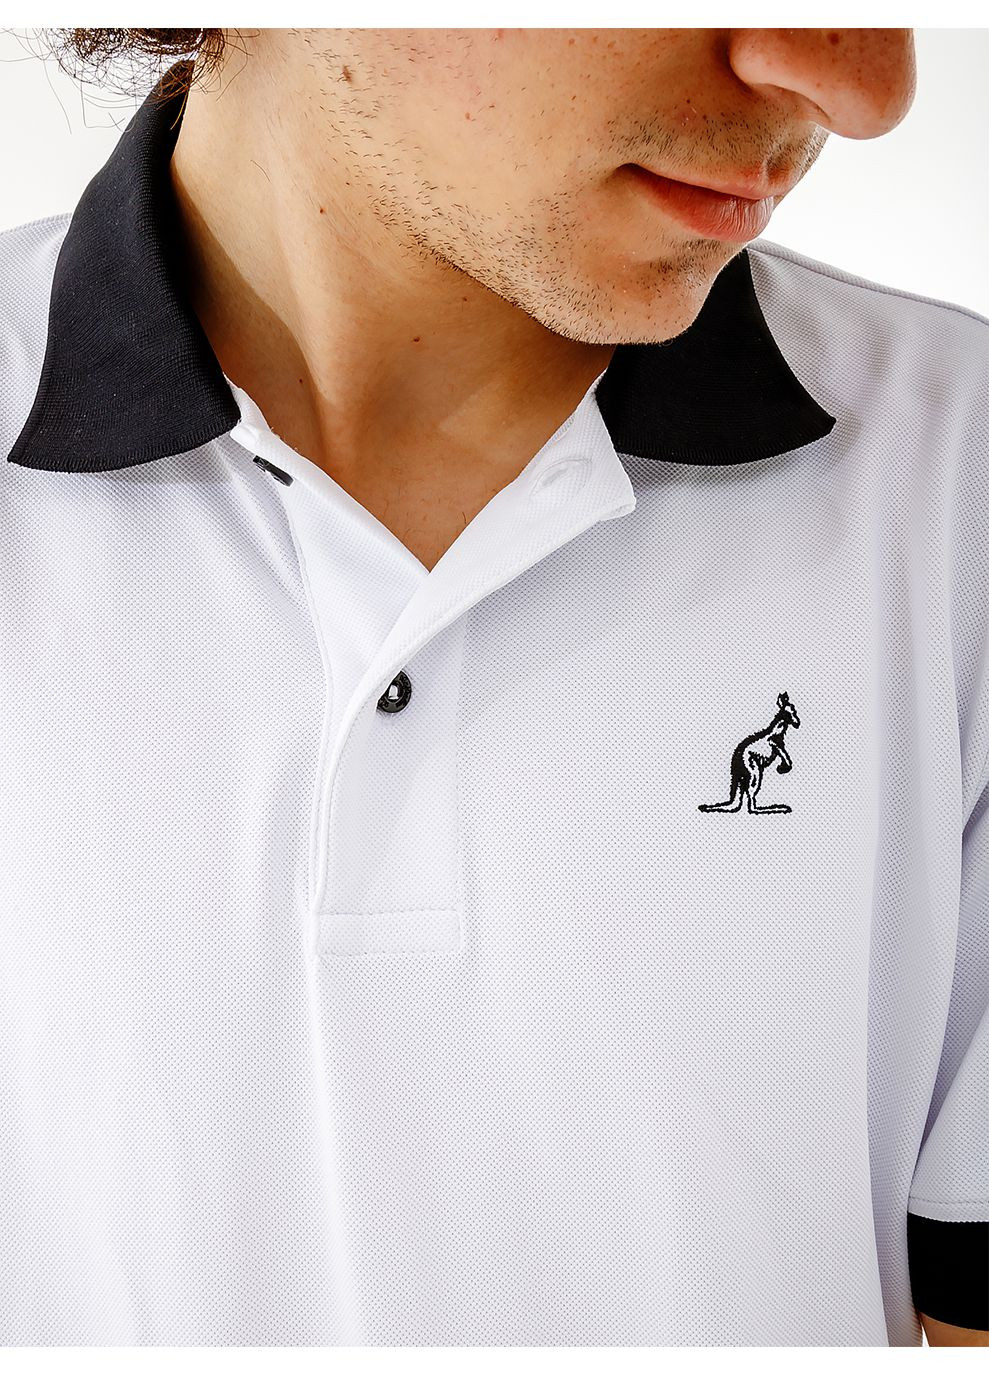 Белая футболка-мужское поло impact polo tech-pique' r-fit белый для мужчин Australian